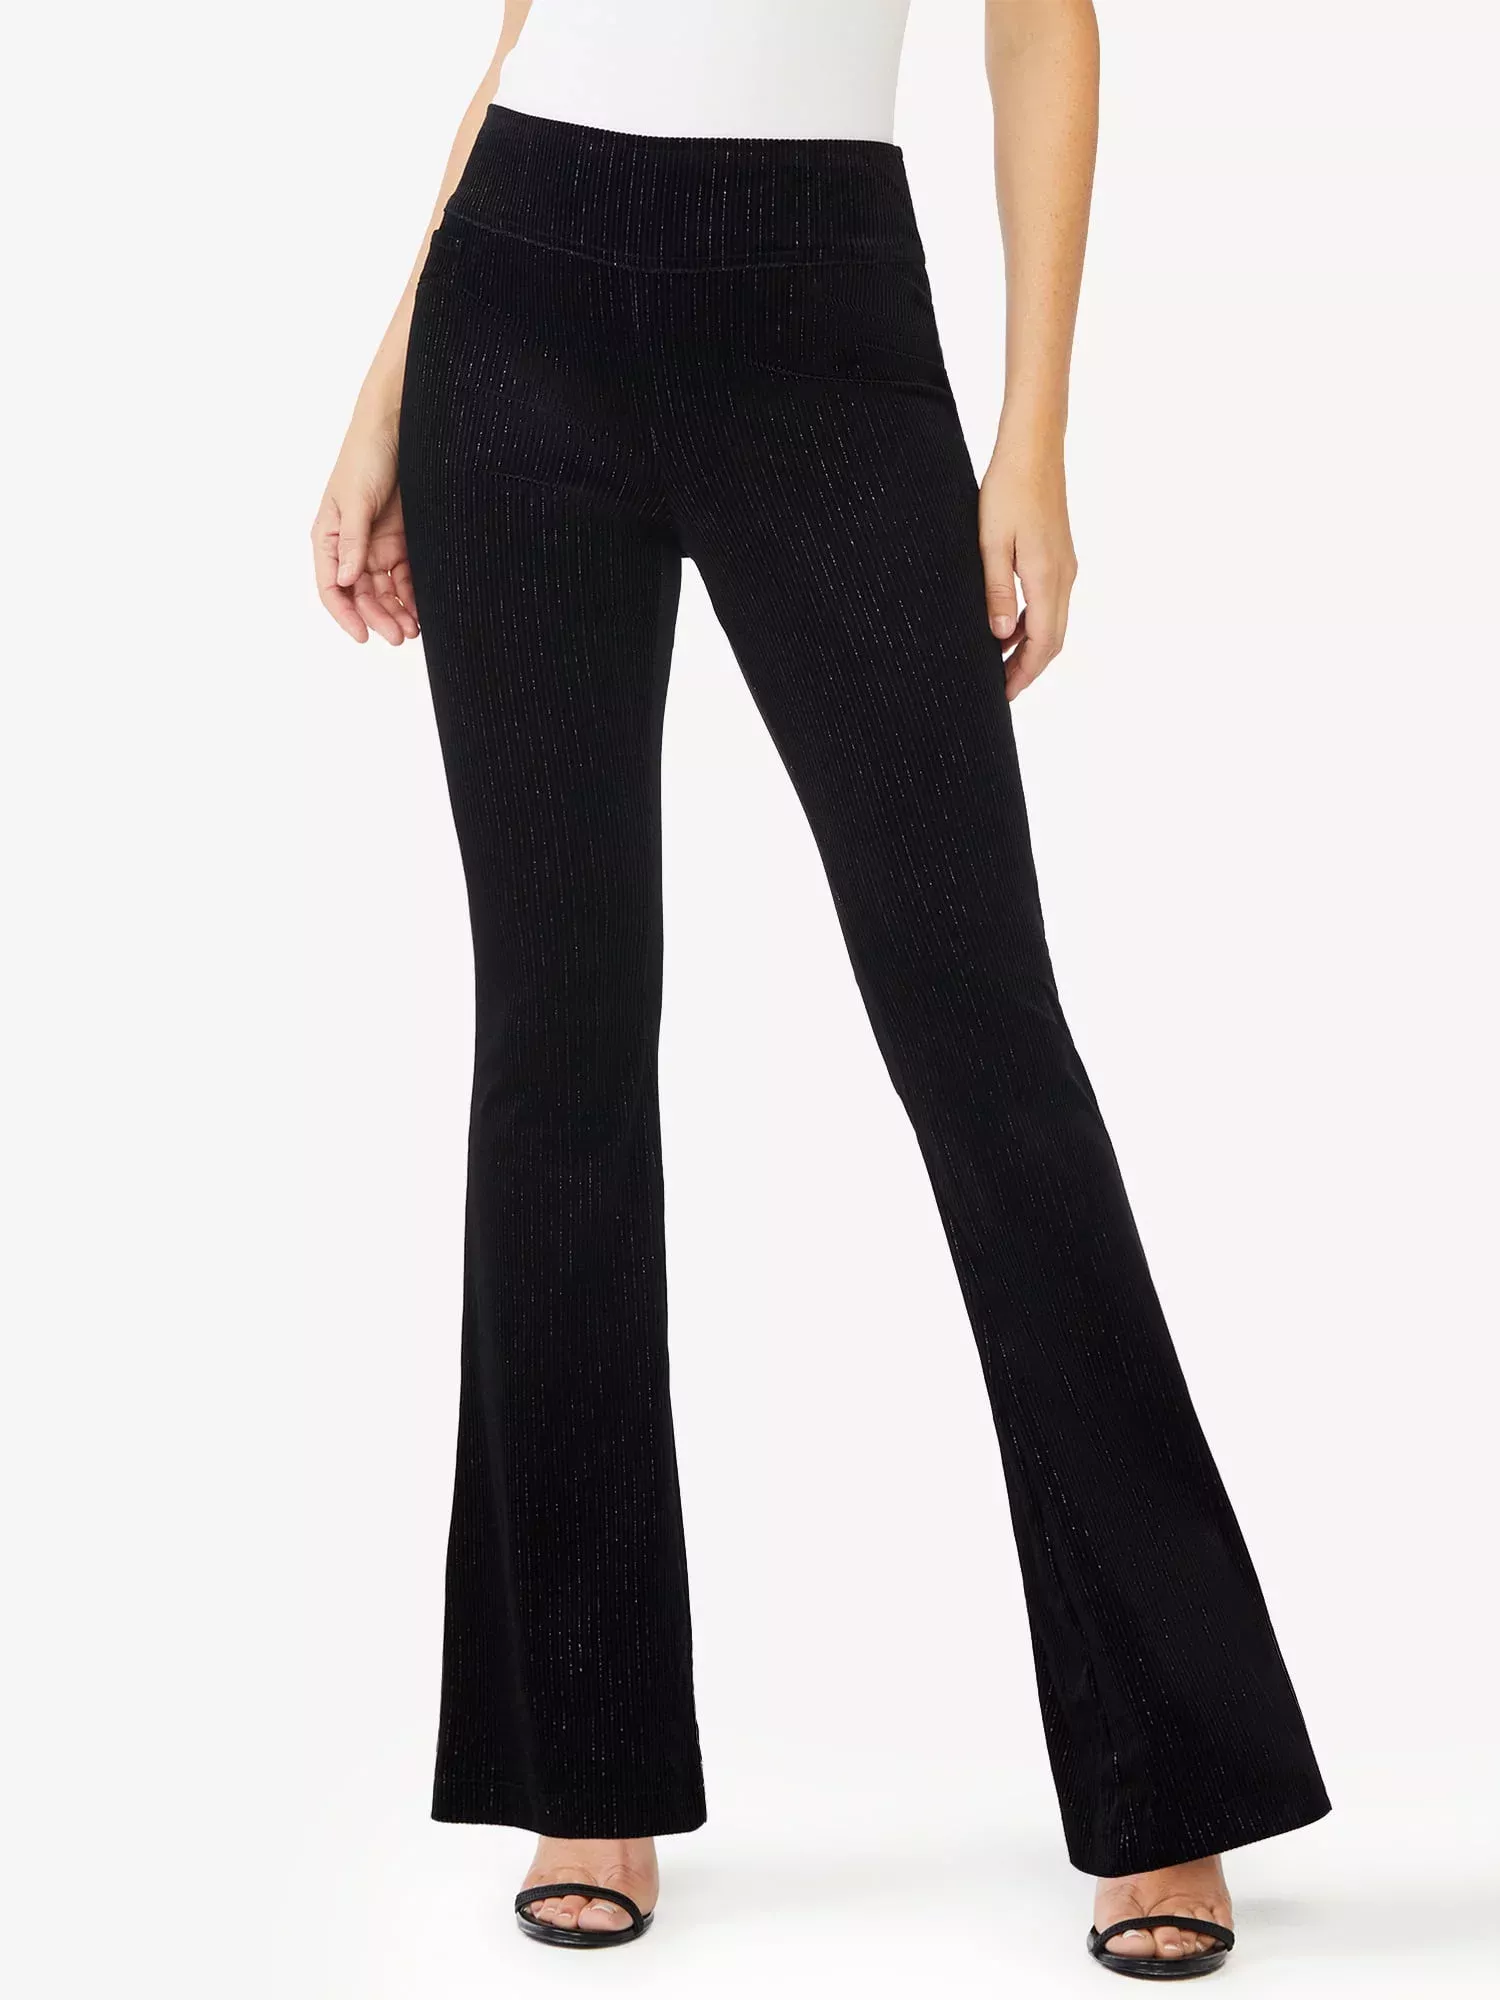 Sofia by Sofia Vergara Black Jeans Size 20 (Plus) - 46% off